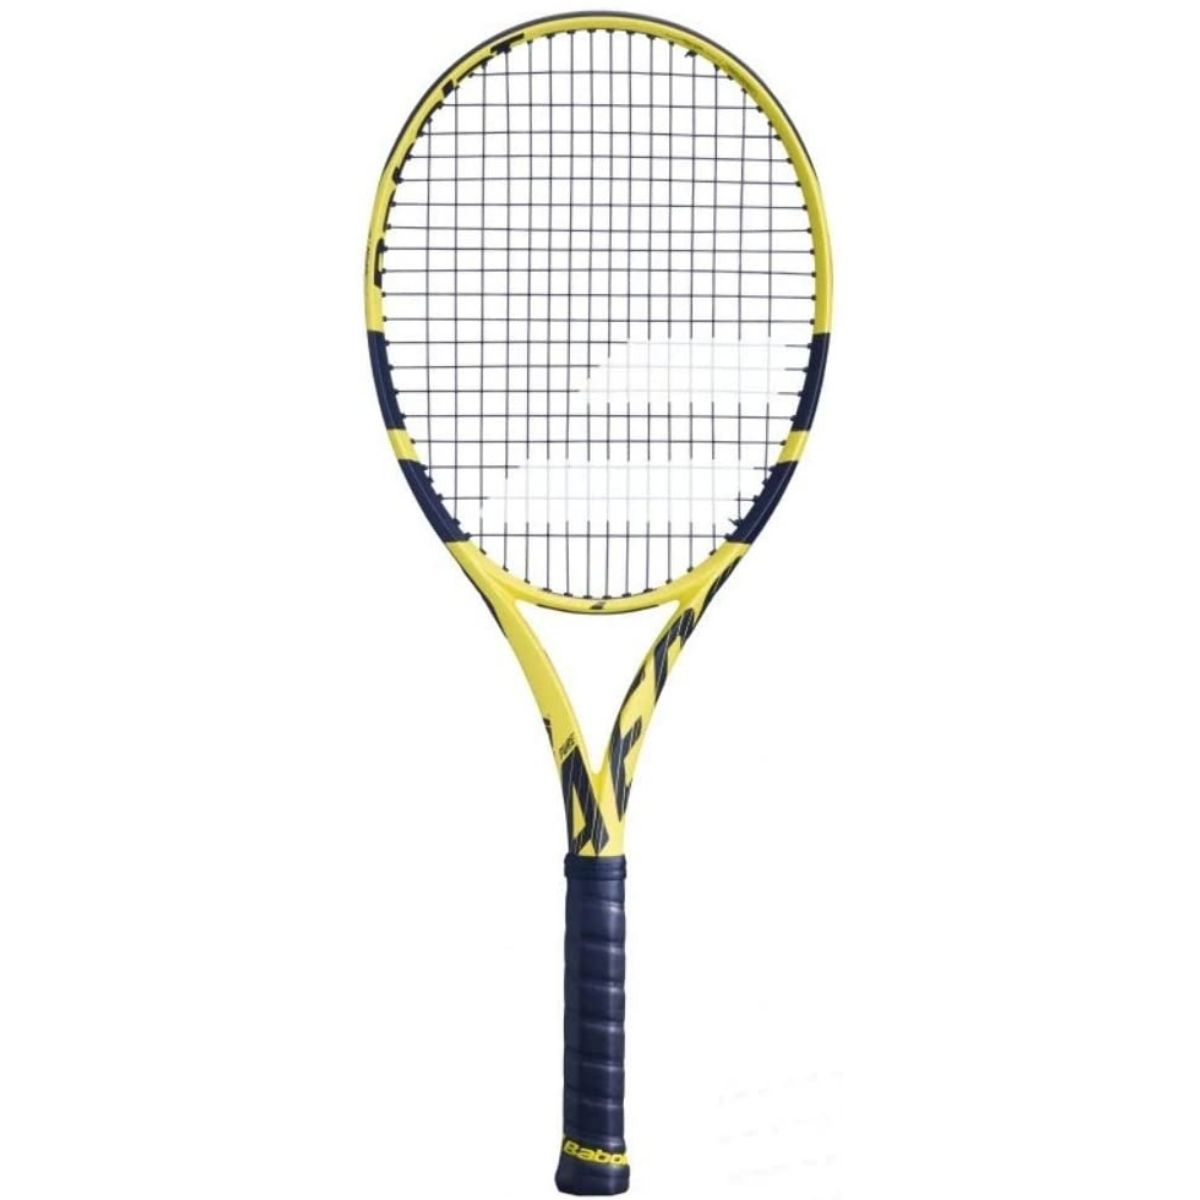 The Best Womens Tennis Rackets Option: Babolat Pure Aero Tennis Racket